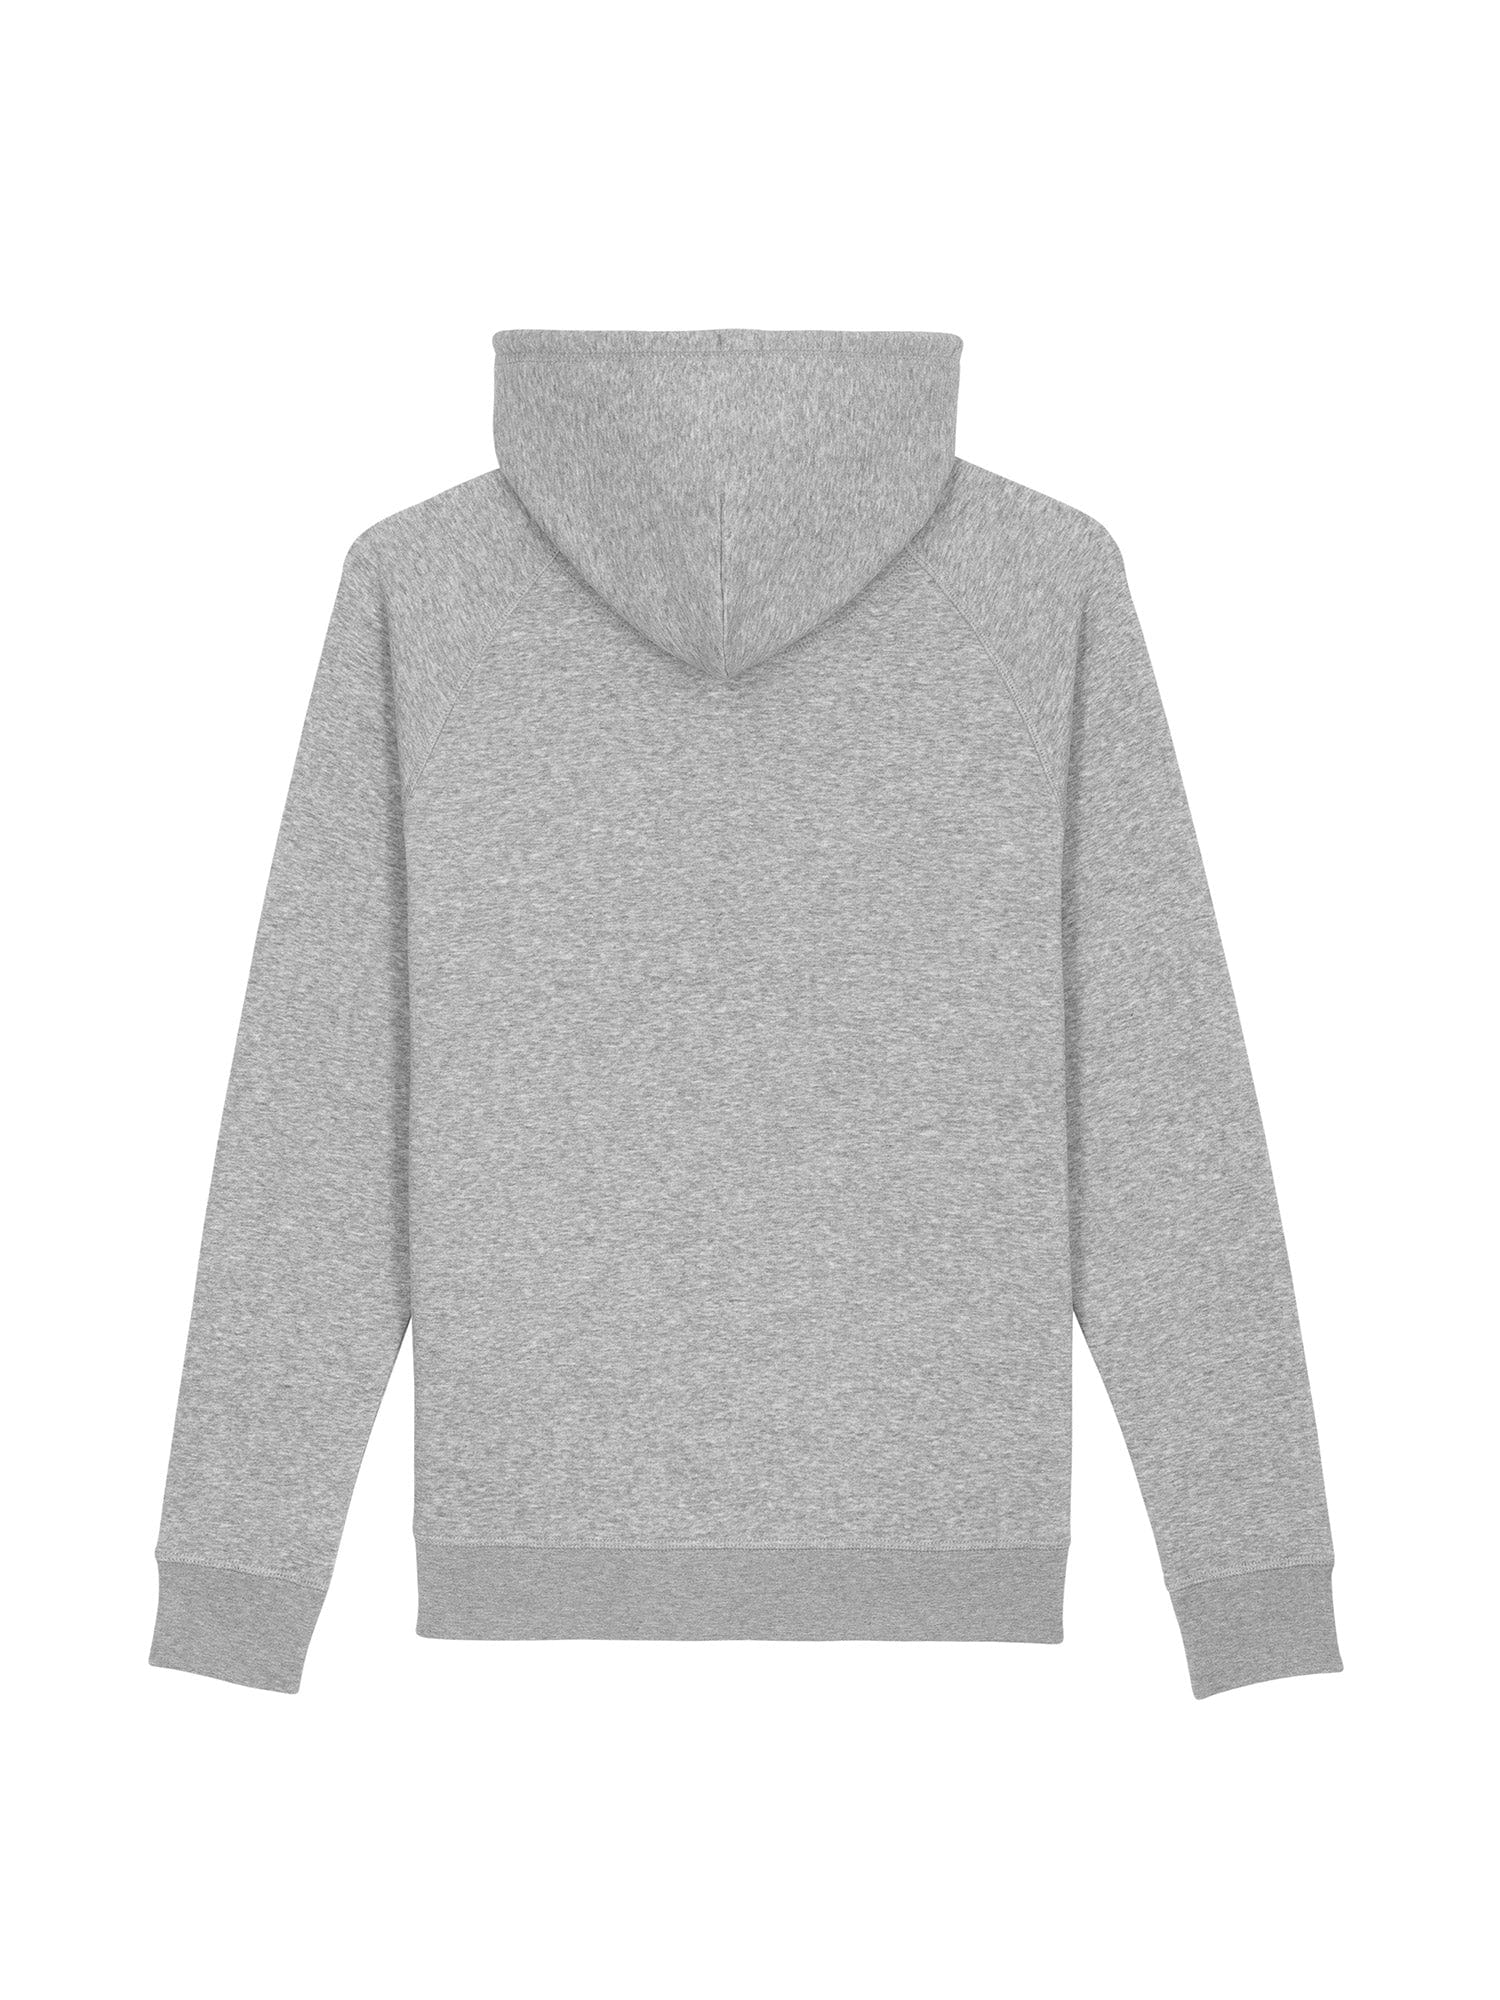 stanley stella unisex organic hoodie stsu824 portait heather grey back flat lay